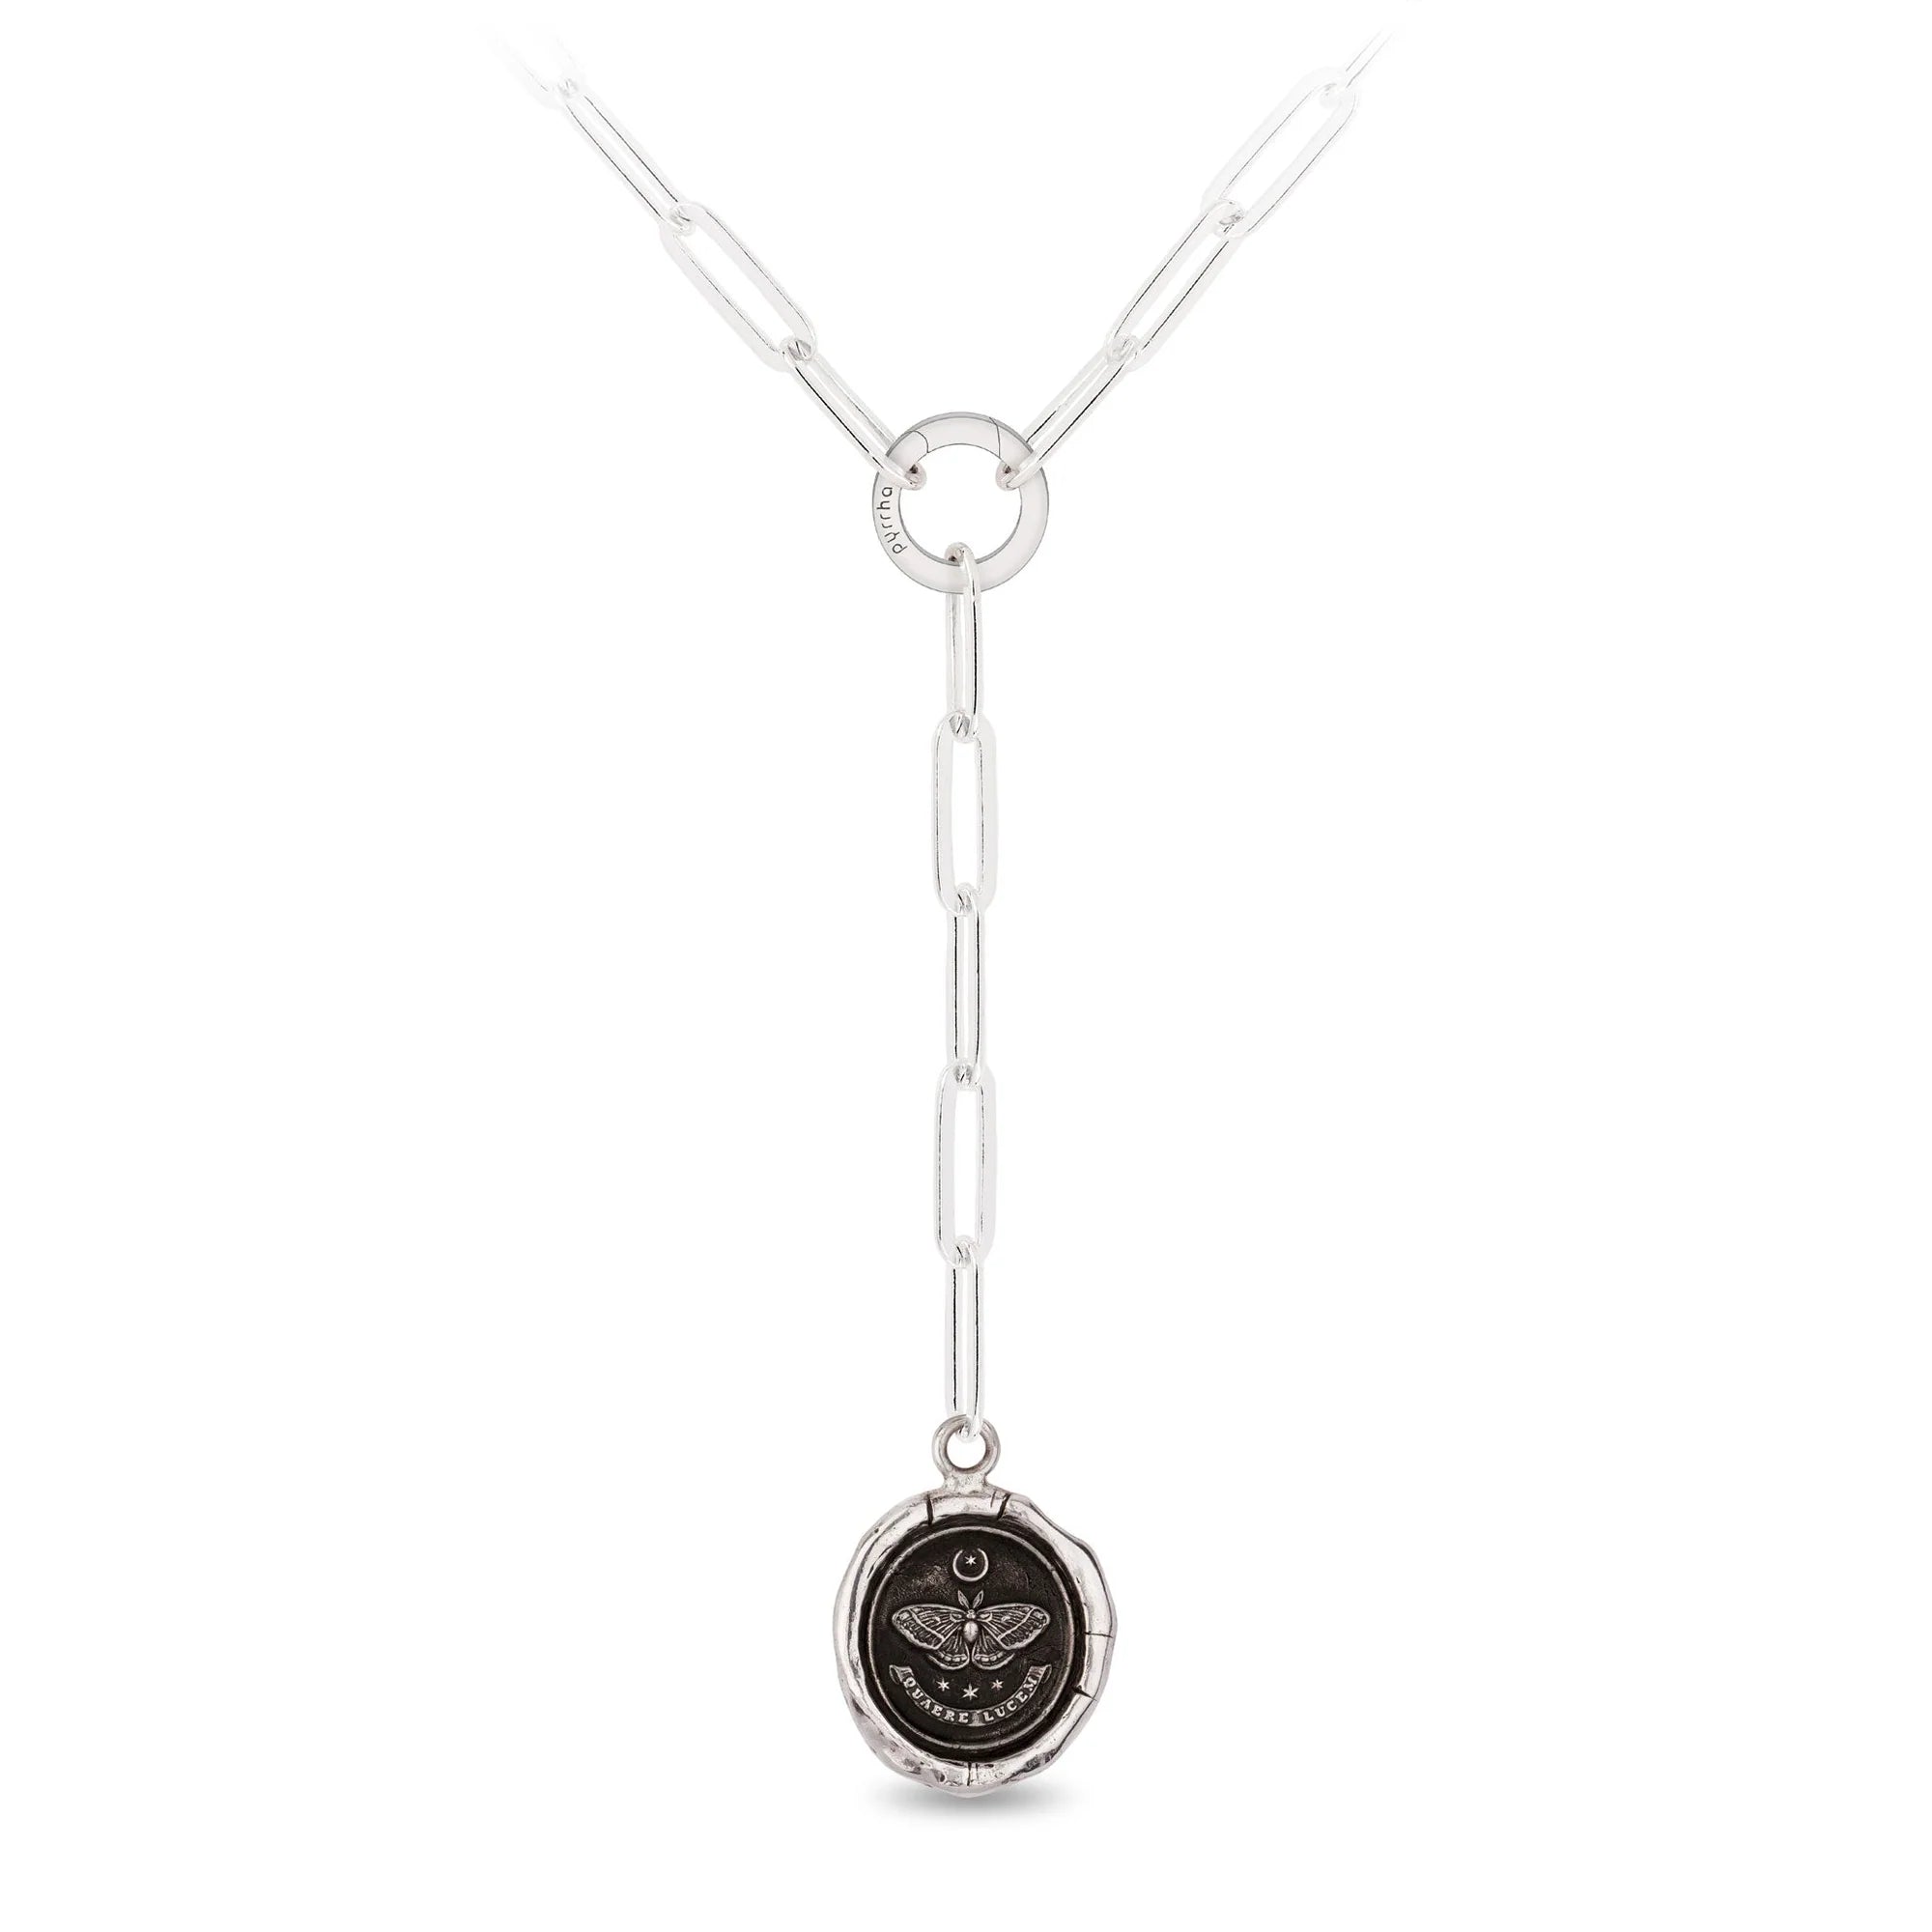 Pyrrha Sterling Silver "Seek The Light" Talisman Pendant Large Paperclip Chain Drop Necklace